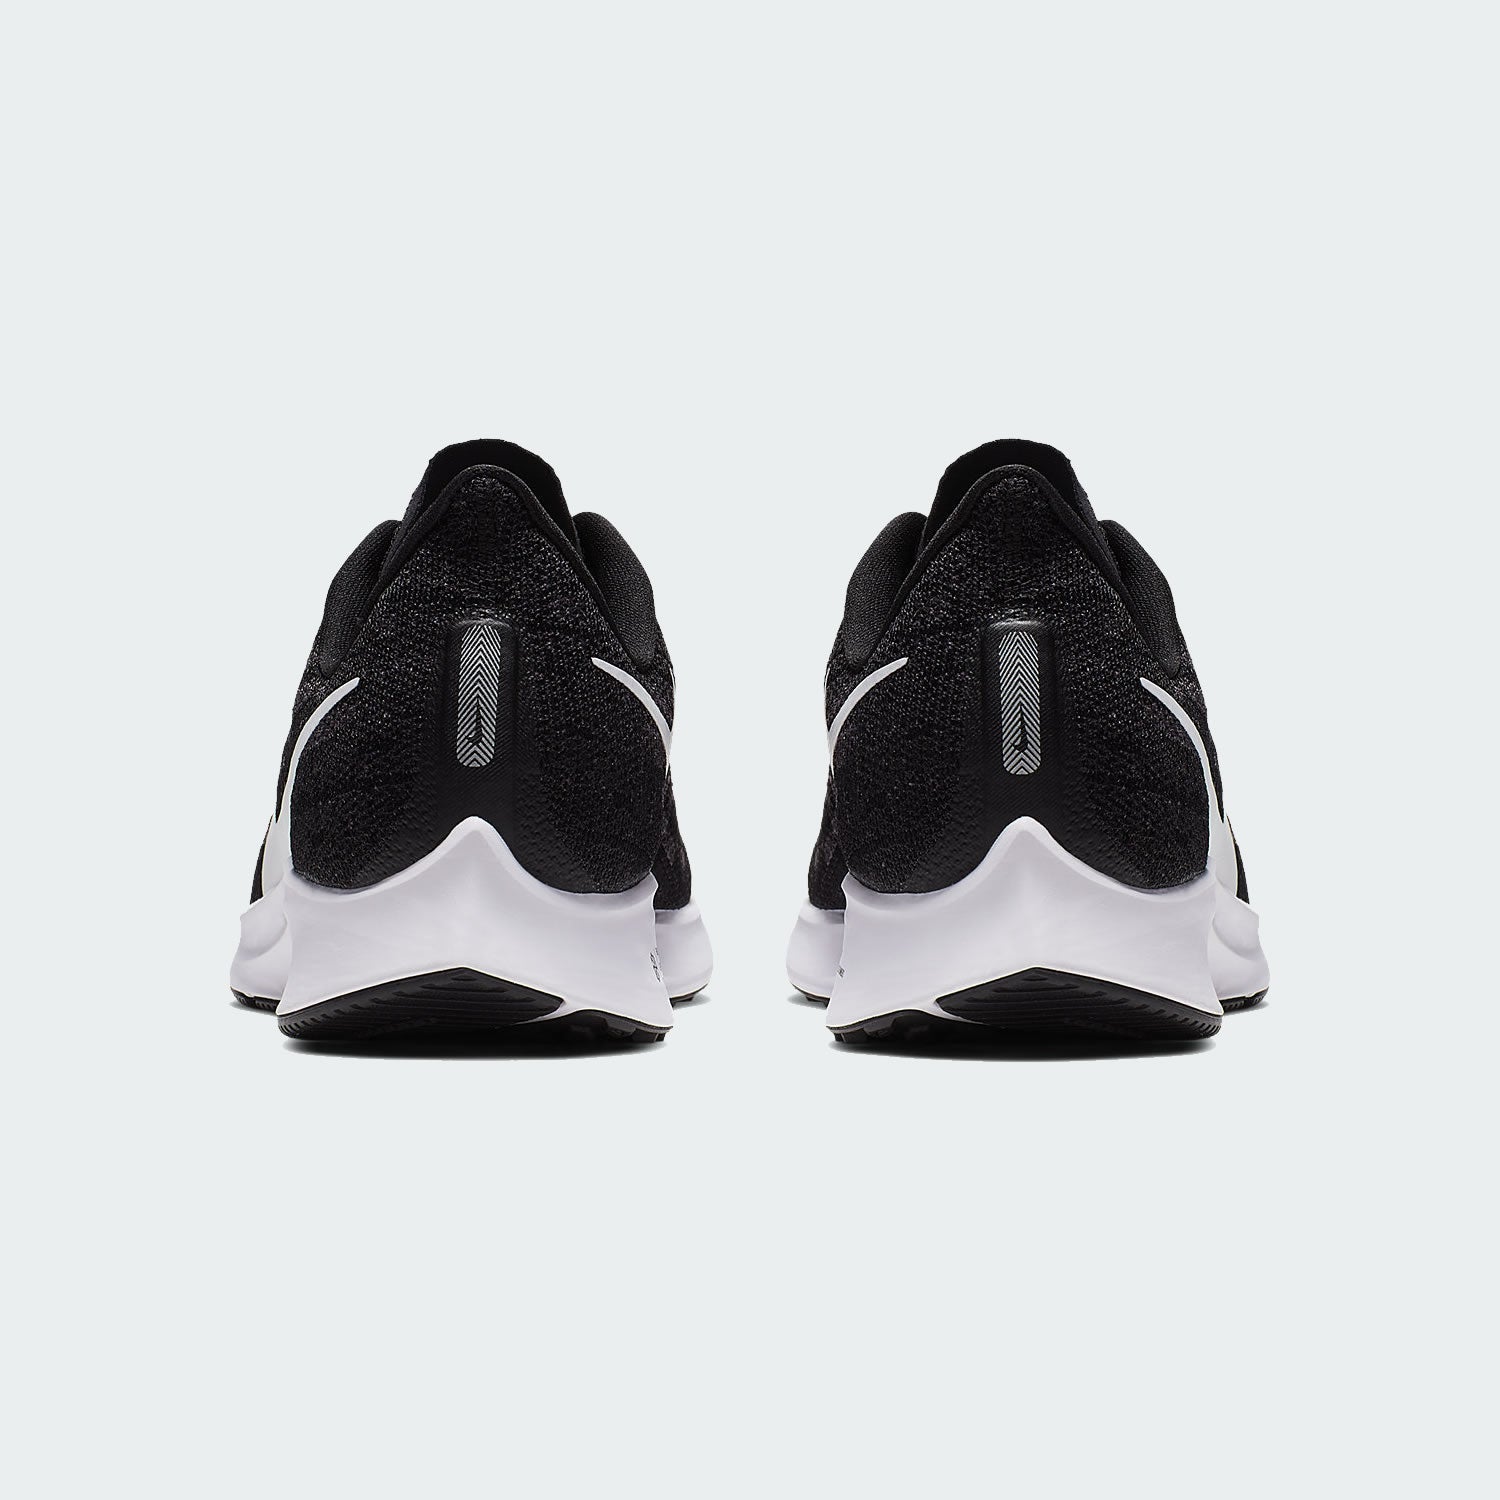 tradesports.co.uk Nike Men's Air Zoom Pegasus 36 Shoes AQ2203 002 Black